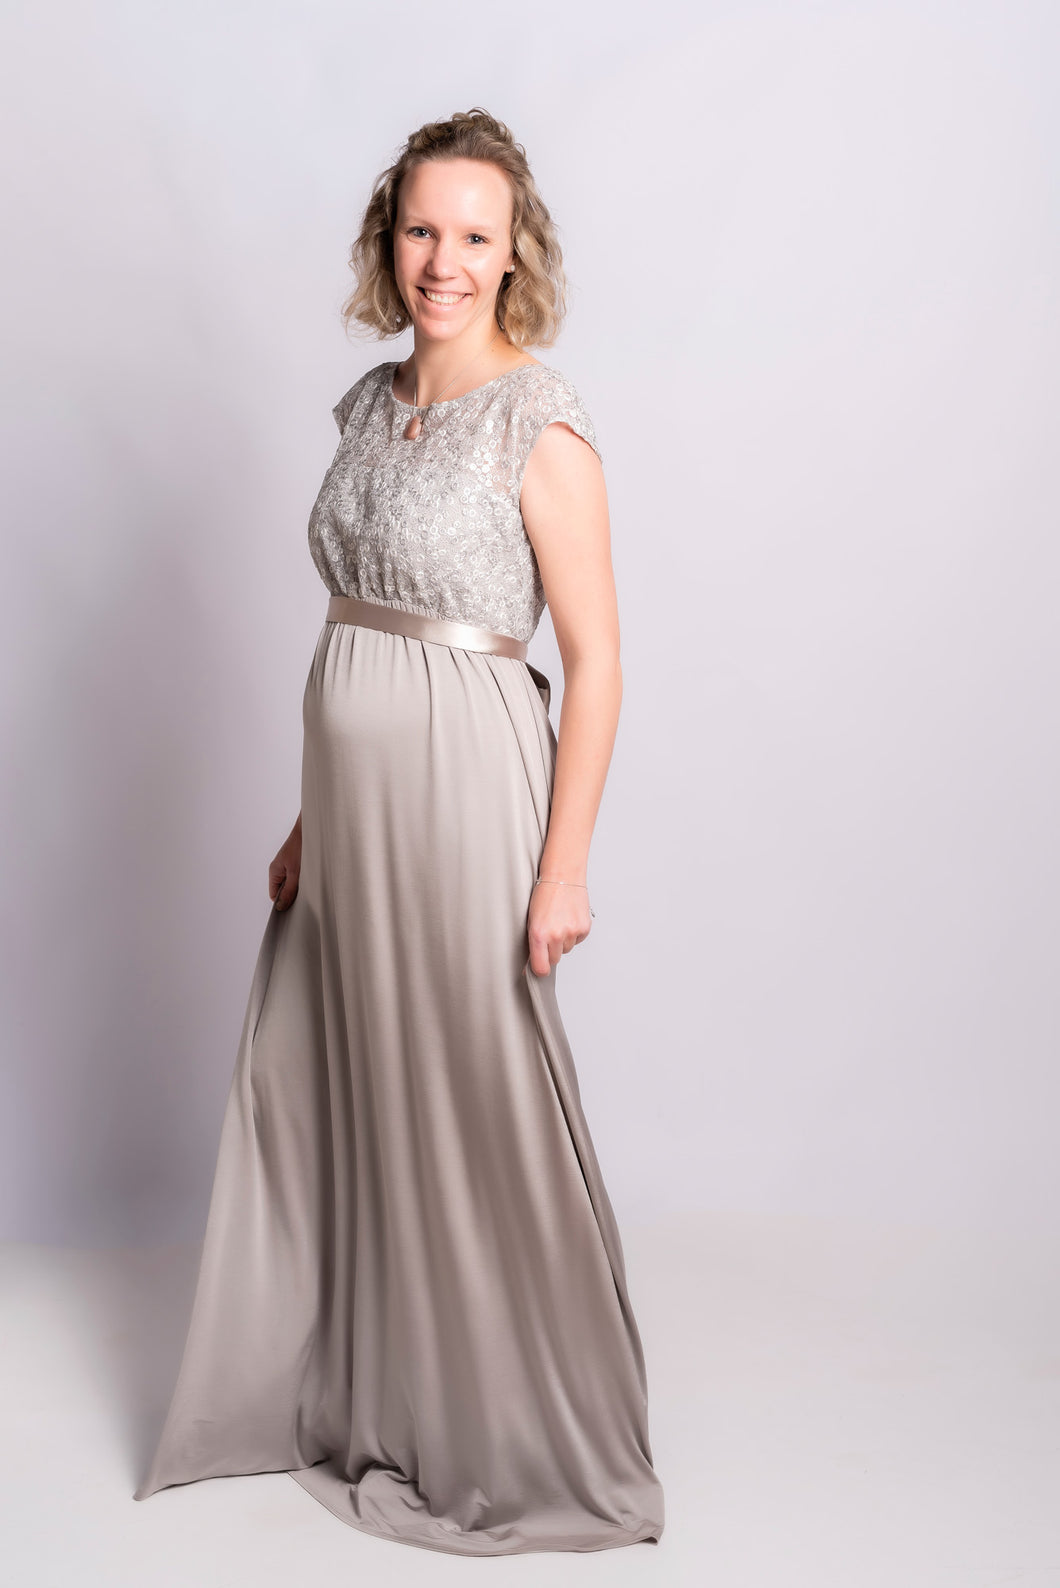 Tiffany Rose - Mia gown silver 40-42 & 44-46  | MILD zwangerschapsboetiek - zwangerschapskleding bij Mechelen